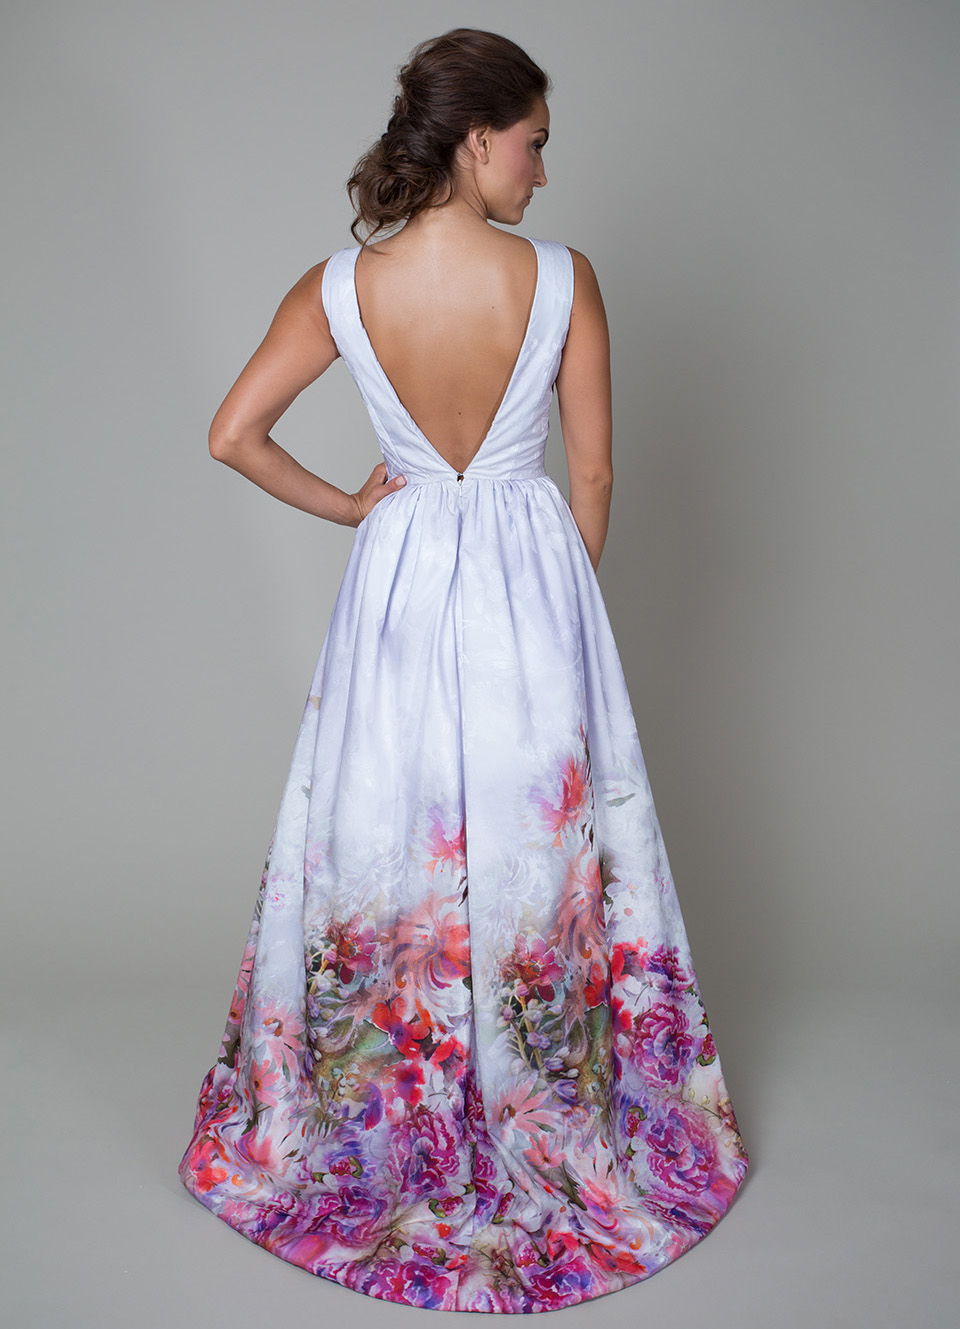 20 Floral Wedding Dresses That Will Take Your Breath Away - Heidi Elnora Valerie Lynn